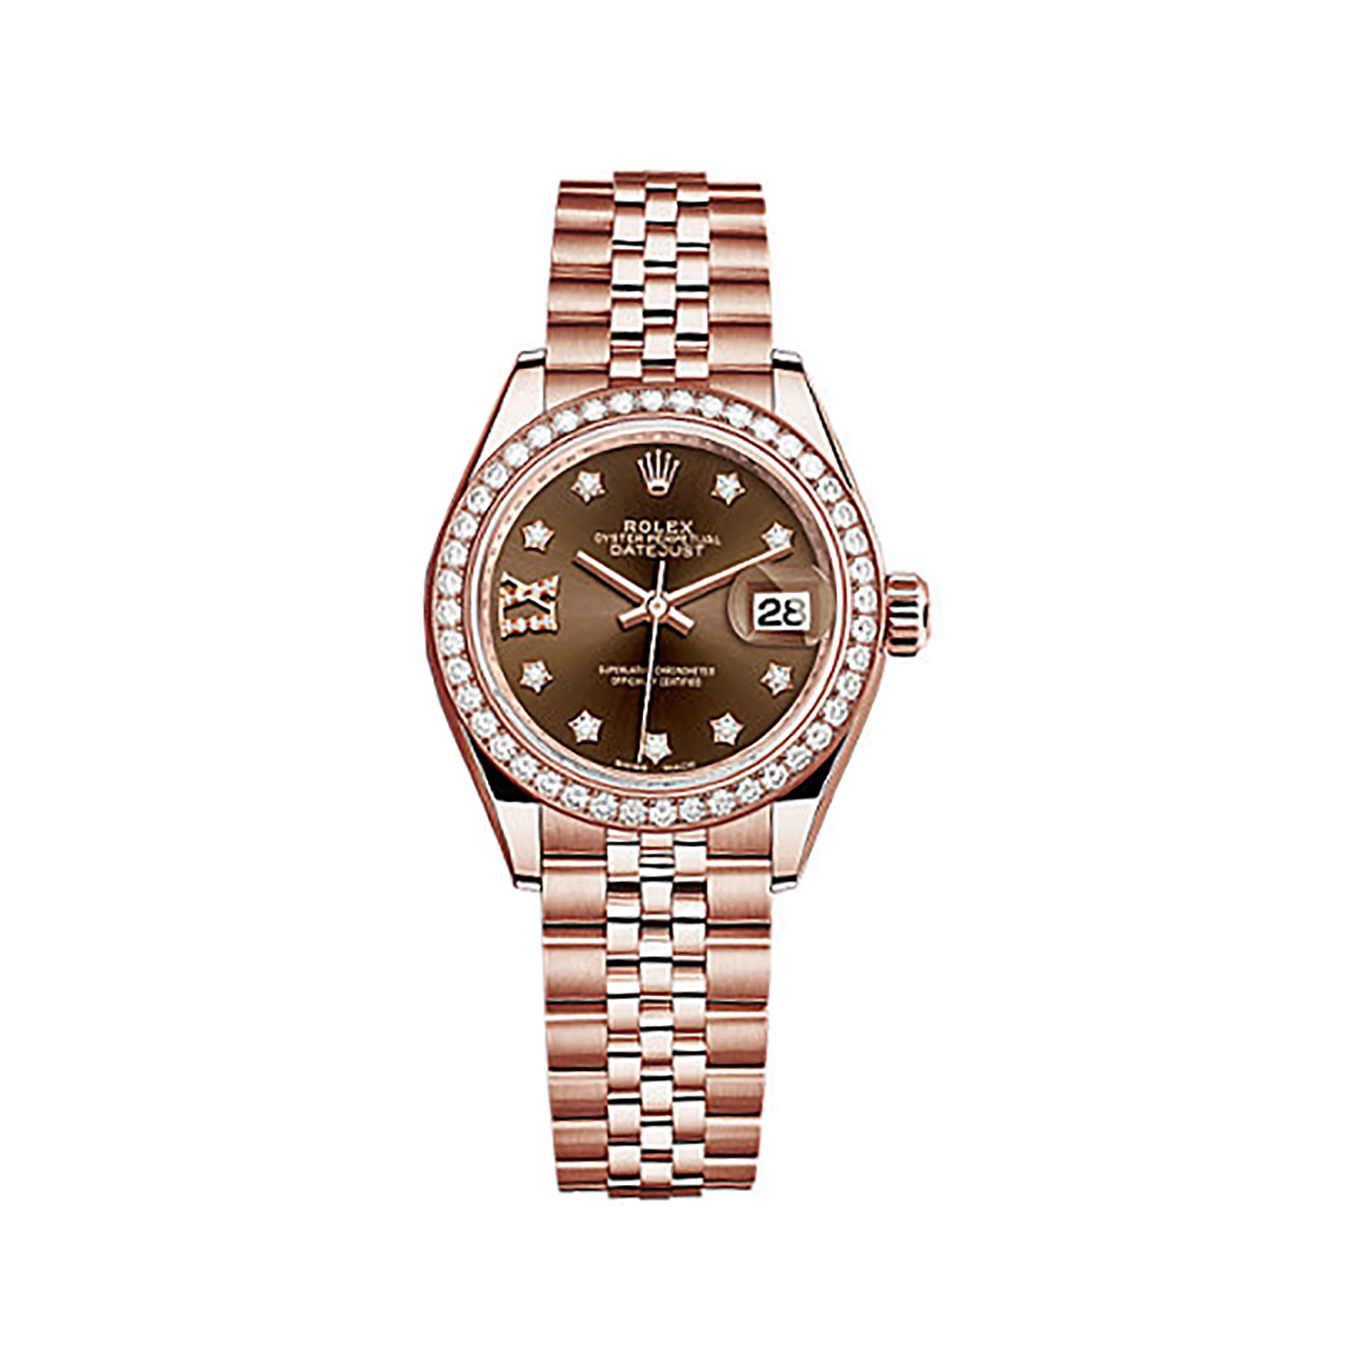 Lady-Datejust 28 279135RBR Rose Gold & Diamonds Watch (Chocolate Set with Diamonds)